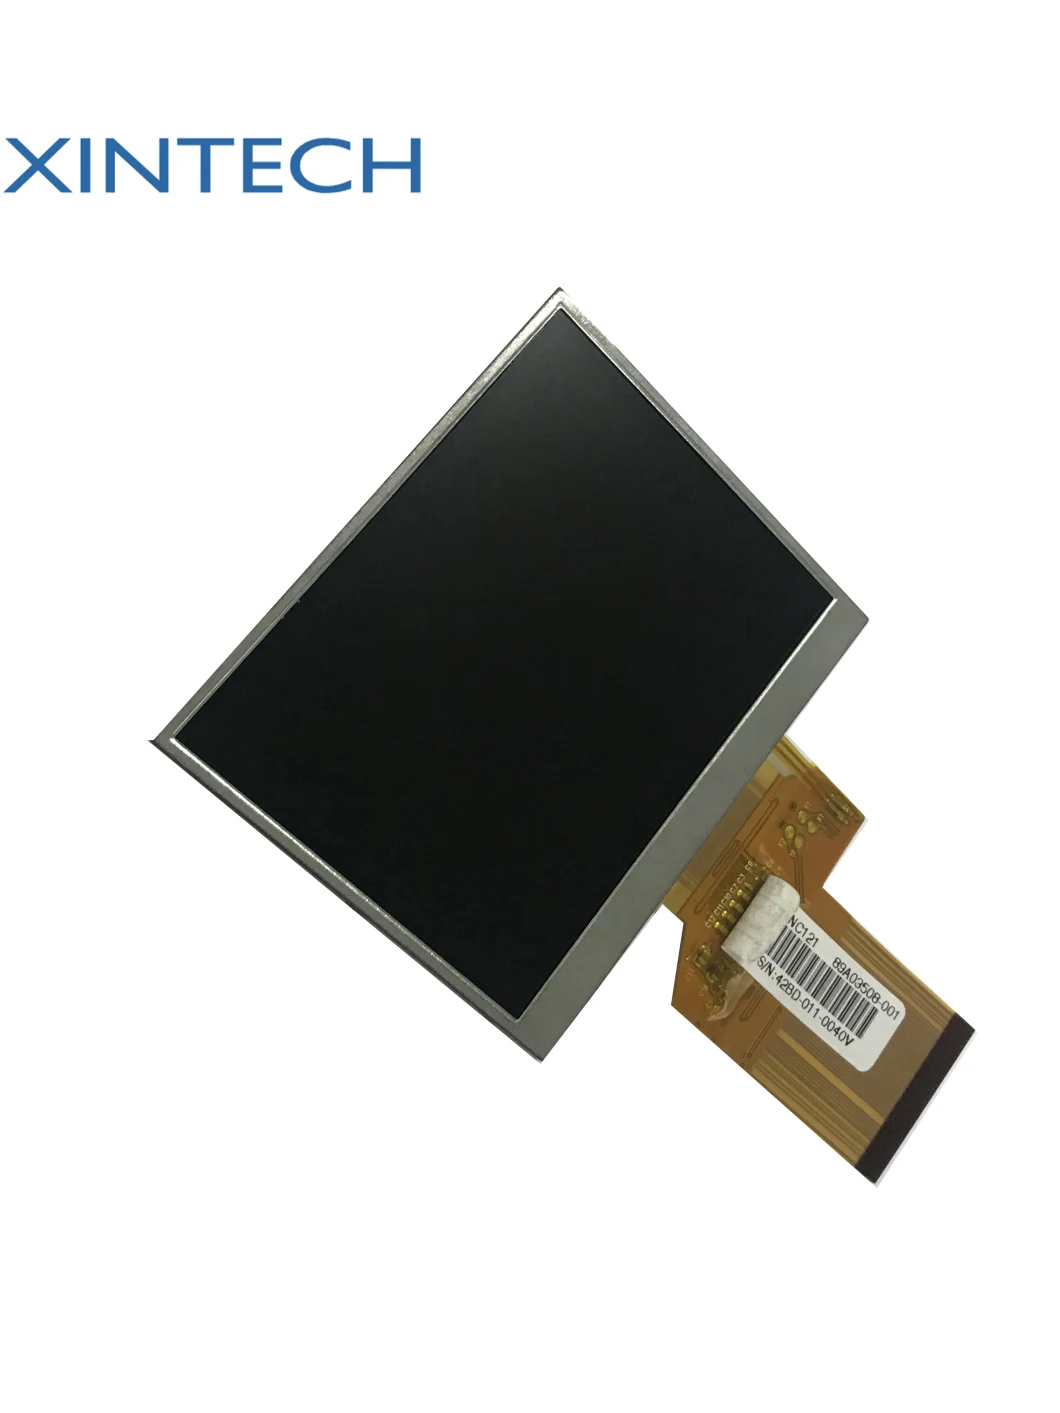 China DOT-Matrix Graphic COB Cog 320X240 Graphic LCD Module